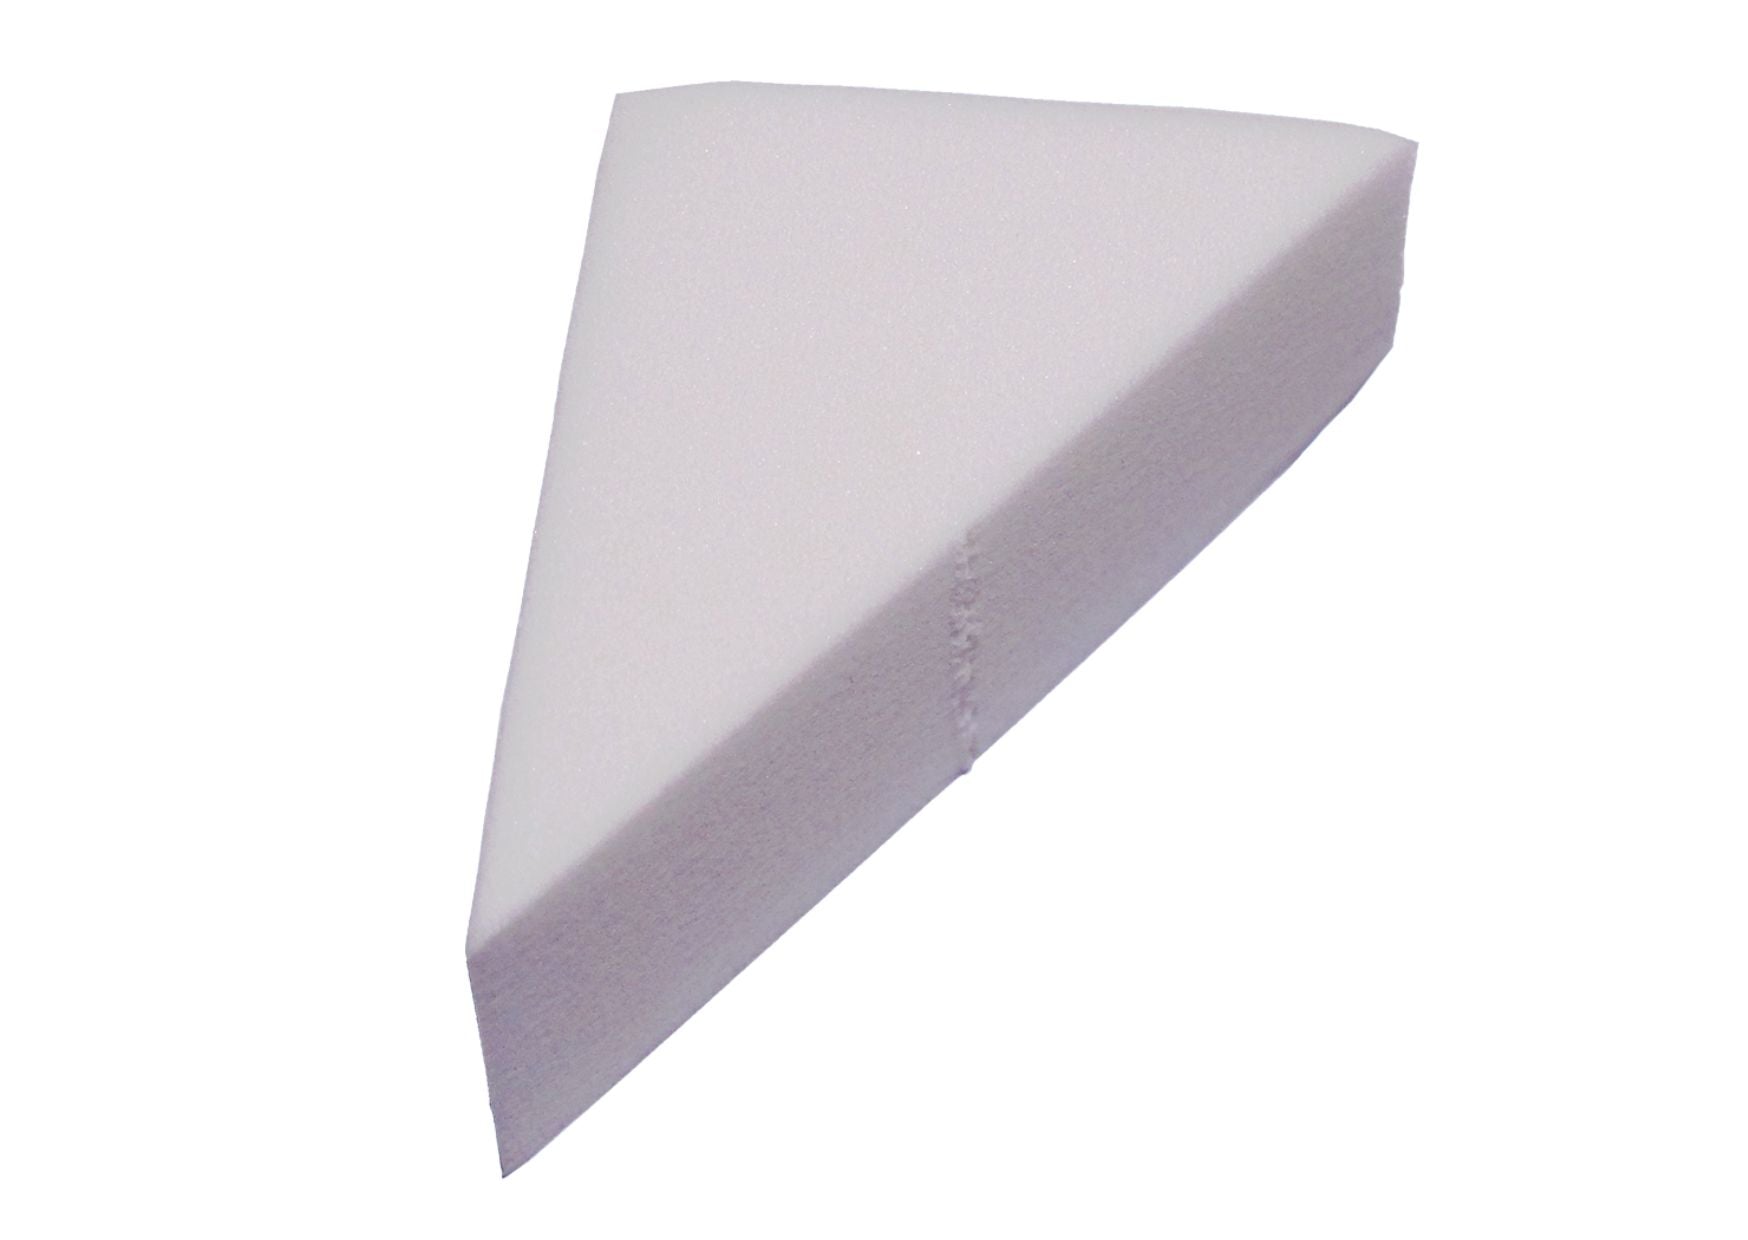 Make up wedge sponge triangle white set of 6